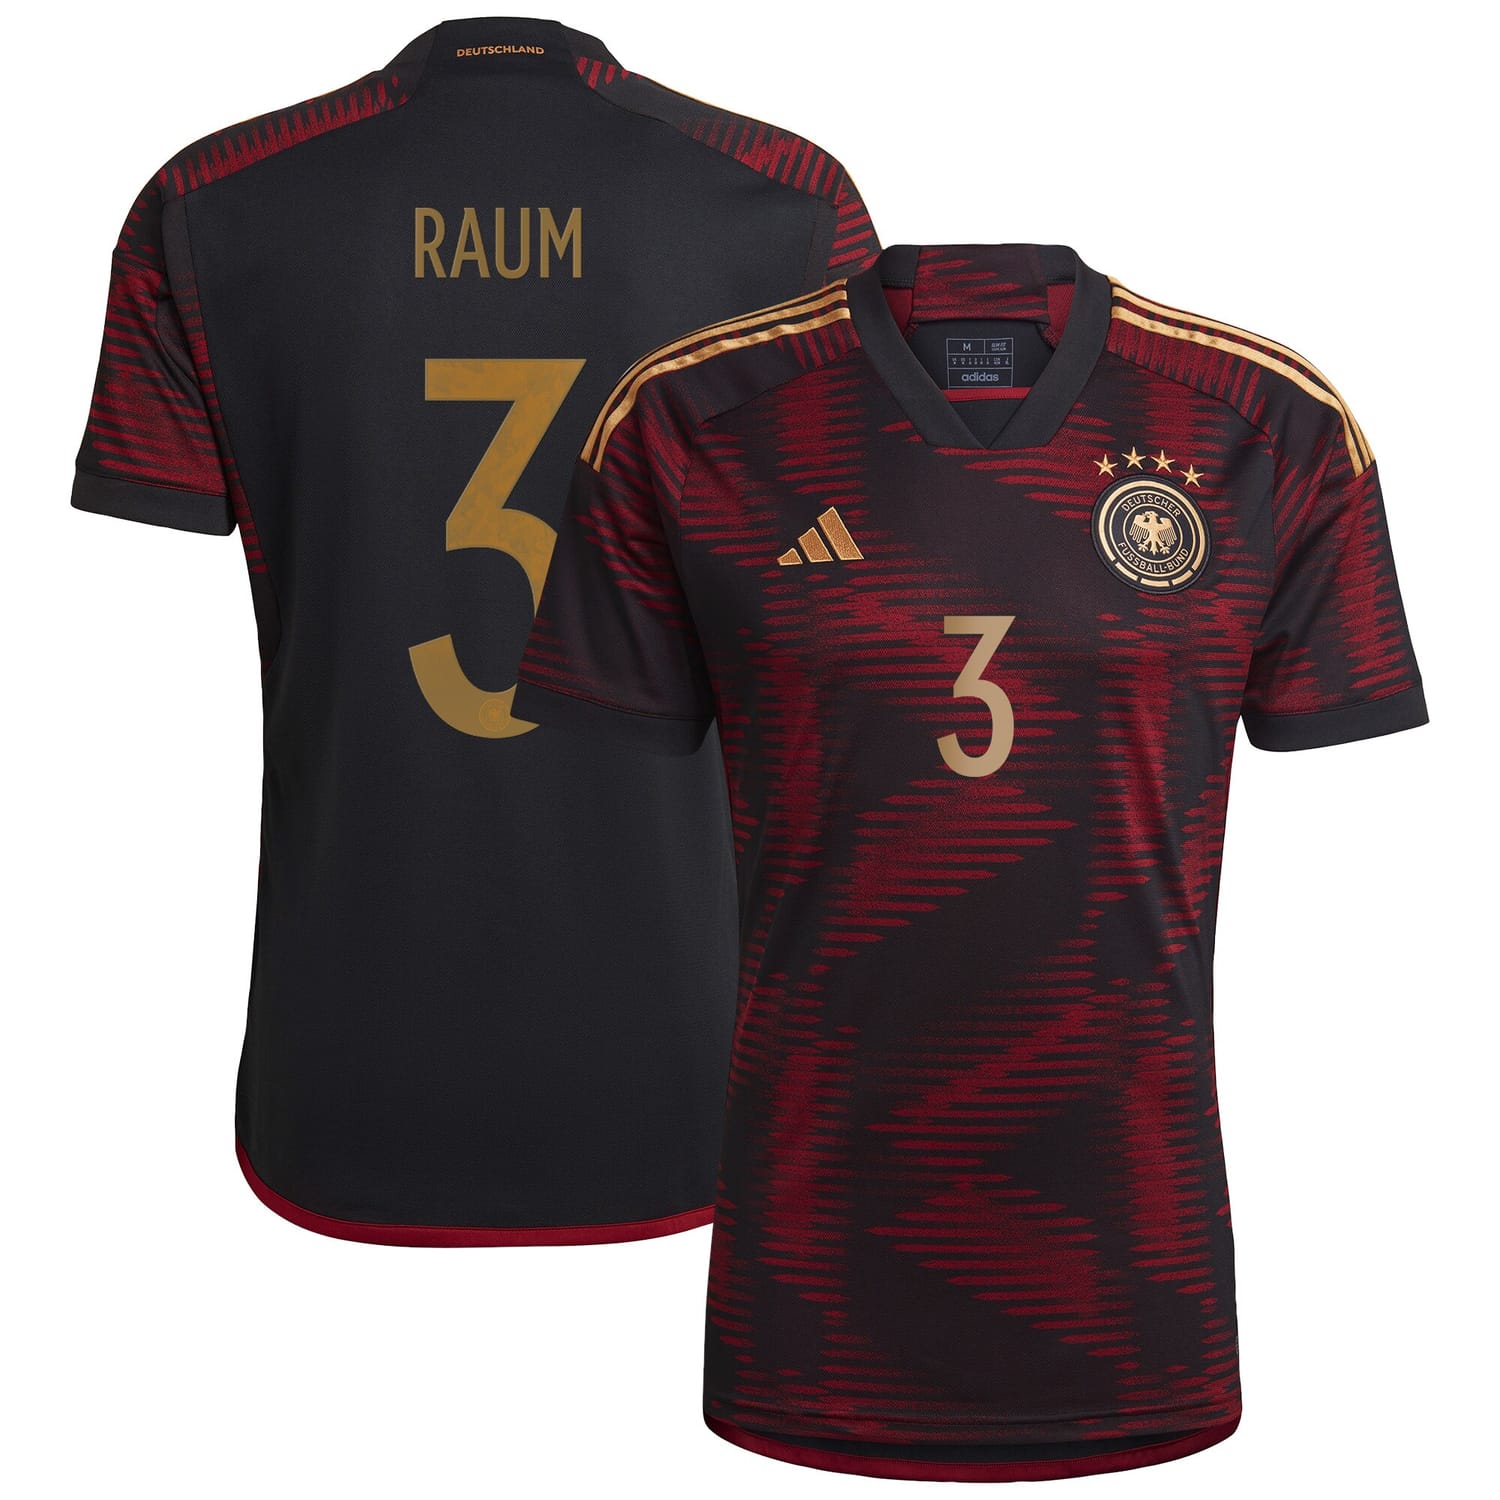 Germany National Team Away Jersey Shirt player David Raum 3 printing for Men